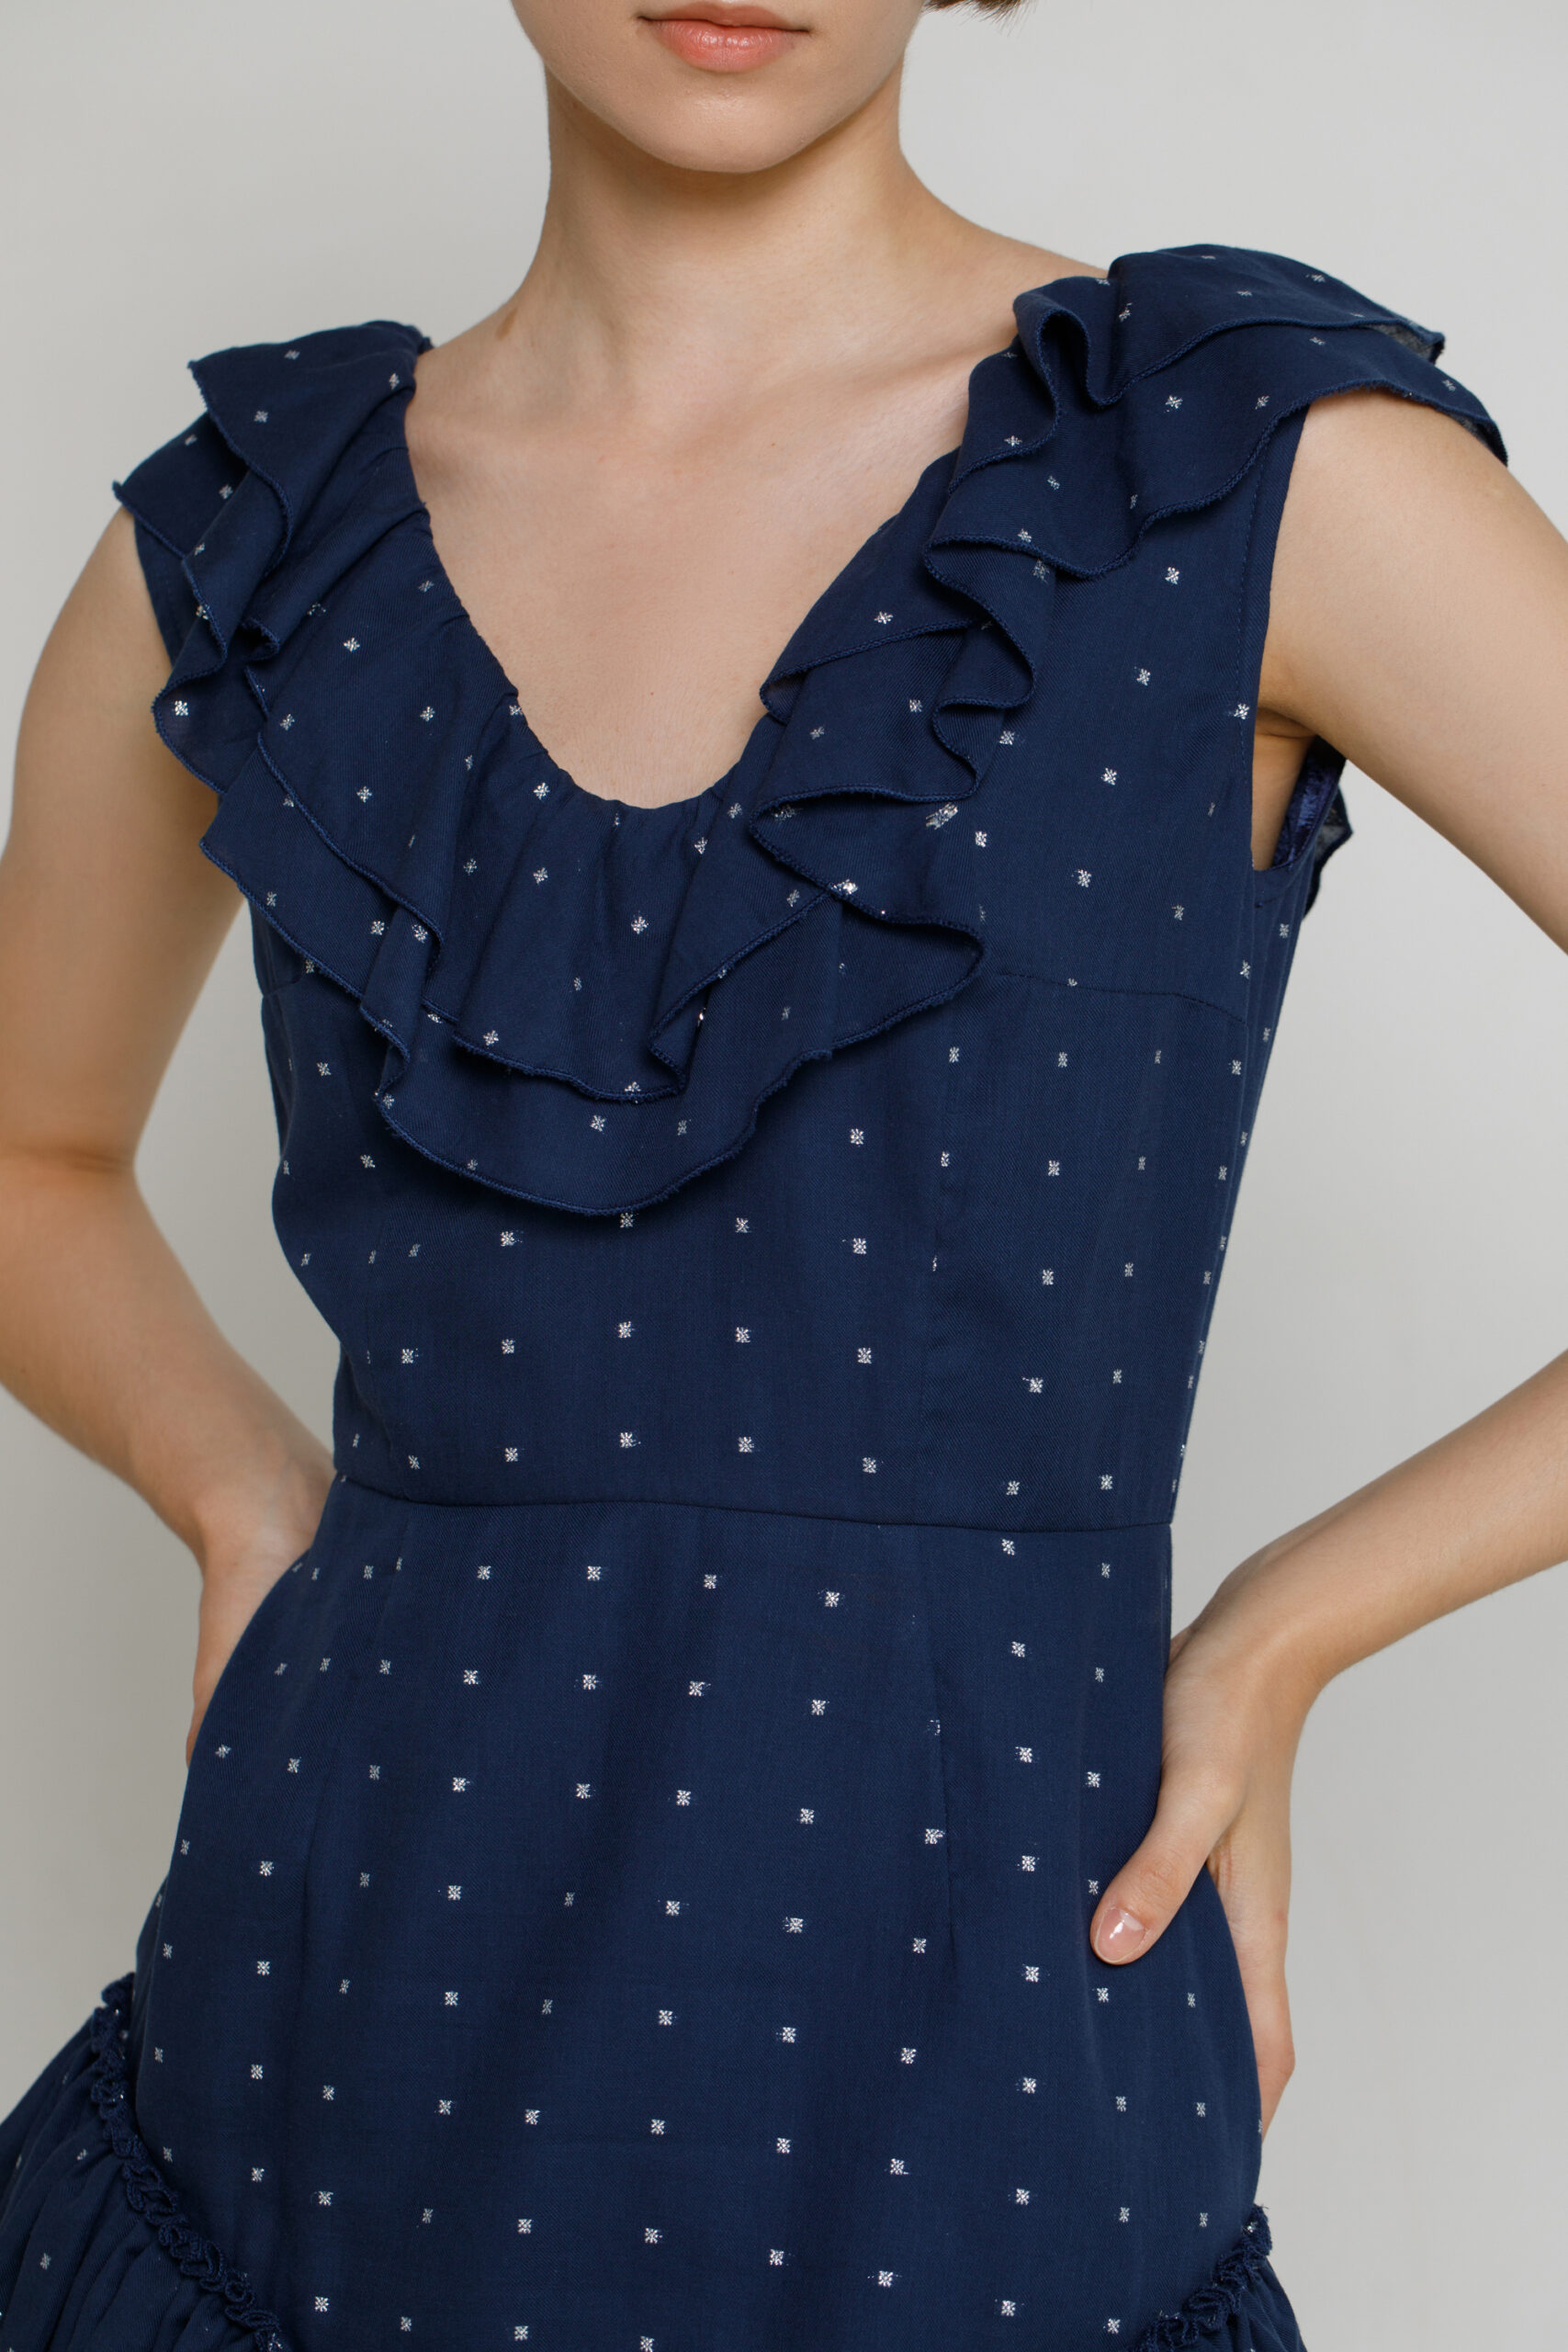 LOVIN 23 casual poplin dress with ruffles. Natural fabrics, original design, handmade embroidery